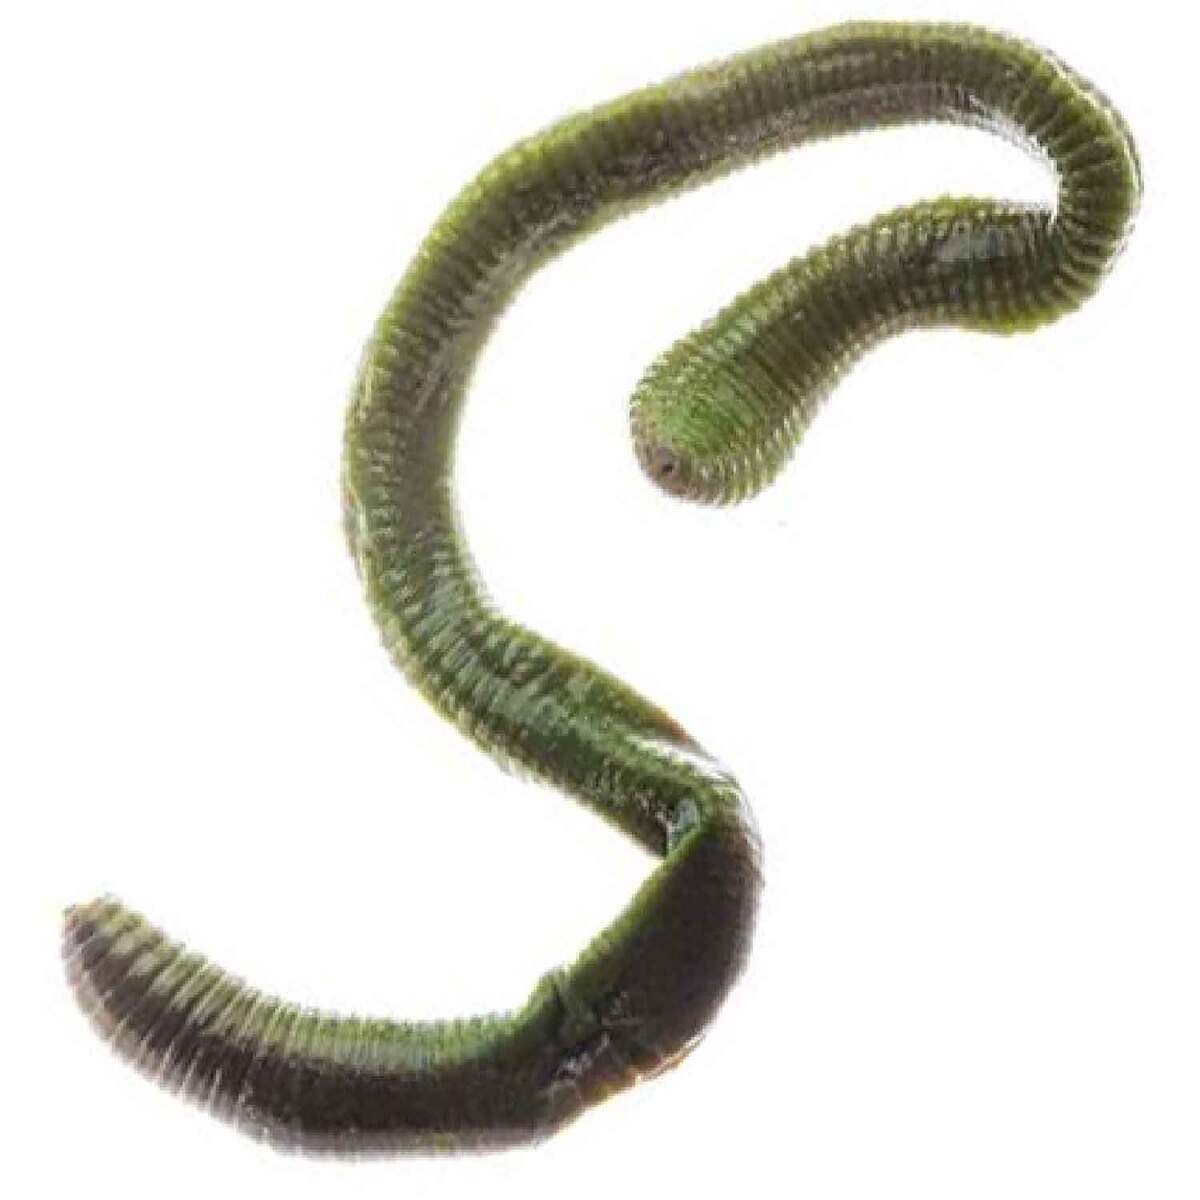 https://www.sportsmans.com/medias/magic-preserved-night-crawler-soft-worm-green-35oz-1553296-1.jpg?context=bWFzdGVyfGltYWdlc3w1NDg5M3xpbWFnZS9qcGVnfGFHWXhMMmhrTVM4eE1EZzJPVEkyTlRBM01qRTFPQzh4TlRVek1qazJMVEZmWW1GelpTMWpiMjUyWlhKemFXOXVSbTl5YldGMFh6RXlNREF0WTI5dWRtVnljMmx2YmtadmNtMWhkQXxmOGZkNDQxYTFjYWJjNWM4YjIwODRlZDcxN2Y3NmIxNjg4OTc5Yjk4ZjhhMjA1Y2I3MWRhYmU3Yzk1NDJjNzM1